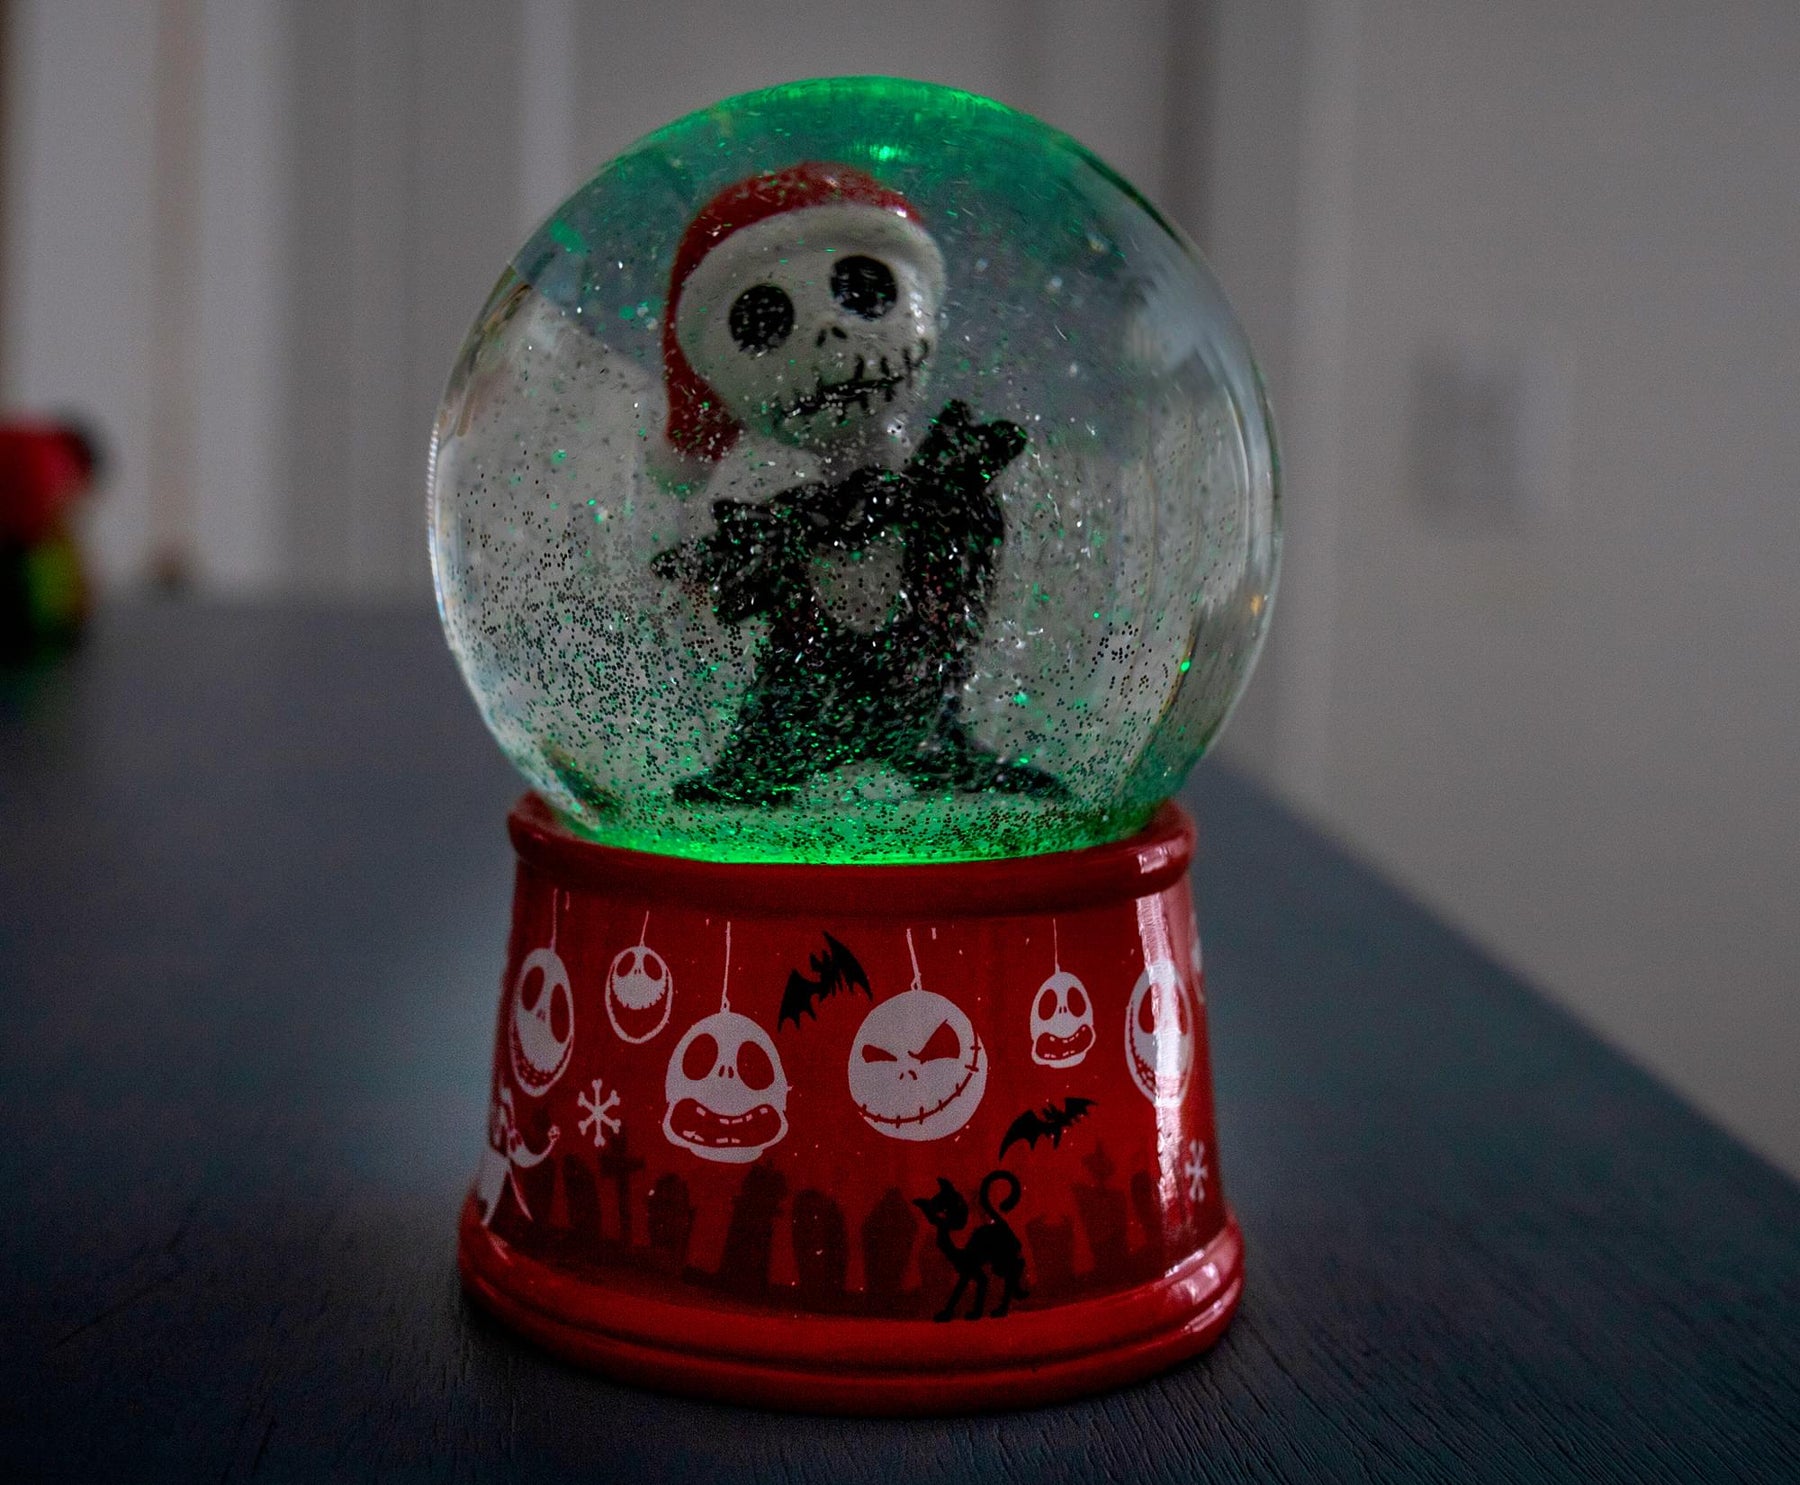 Disney The Nightmare Before Christmas Santa Jack 6-Inch Light-Up Snow Globe